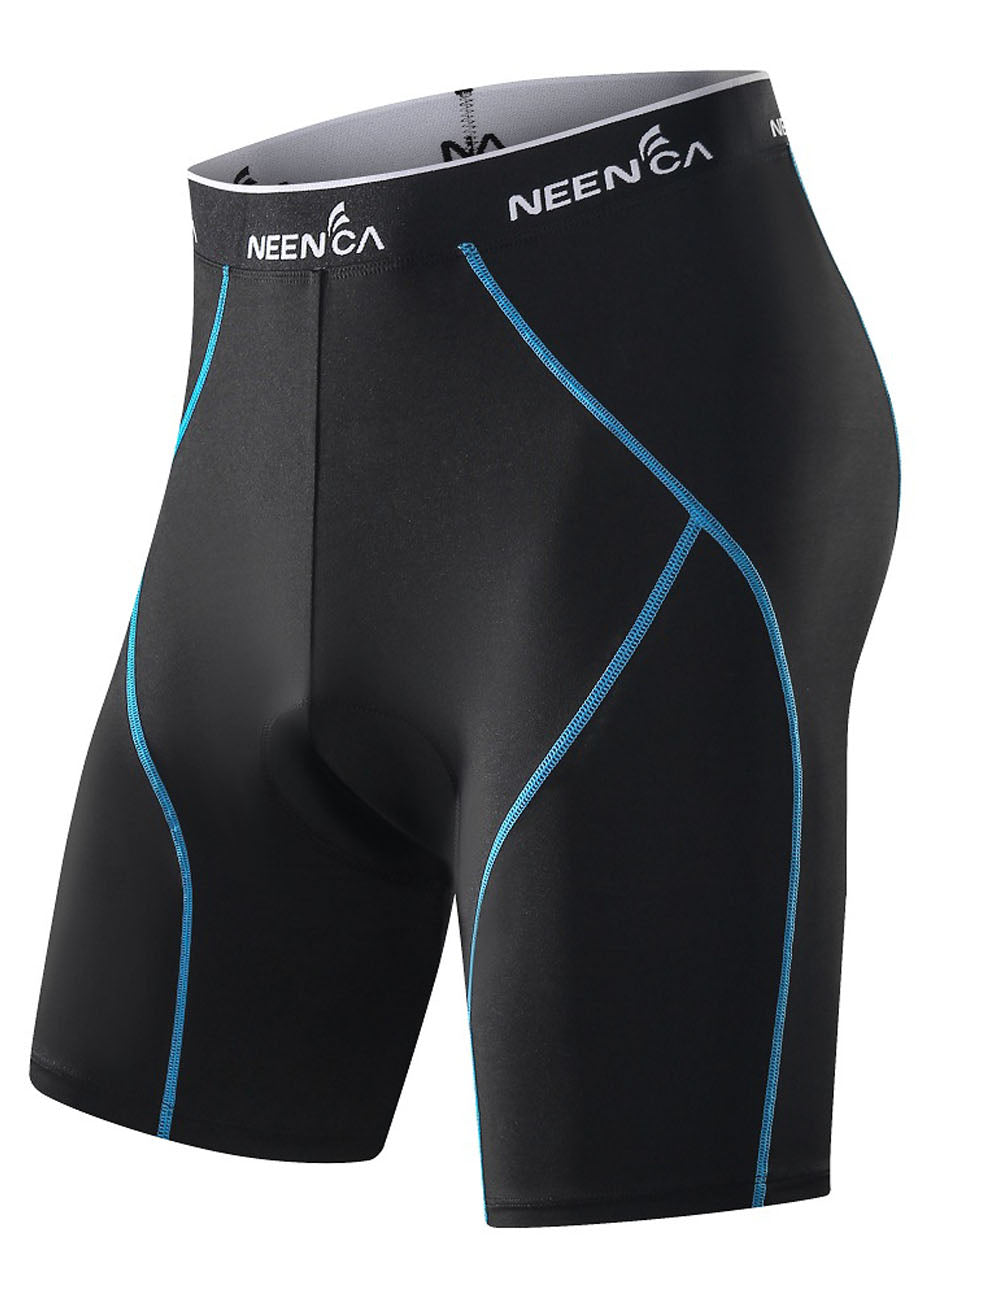 NEENCA Men's Bike Pants Long 4D Padded Cycling Tights Leggings